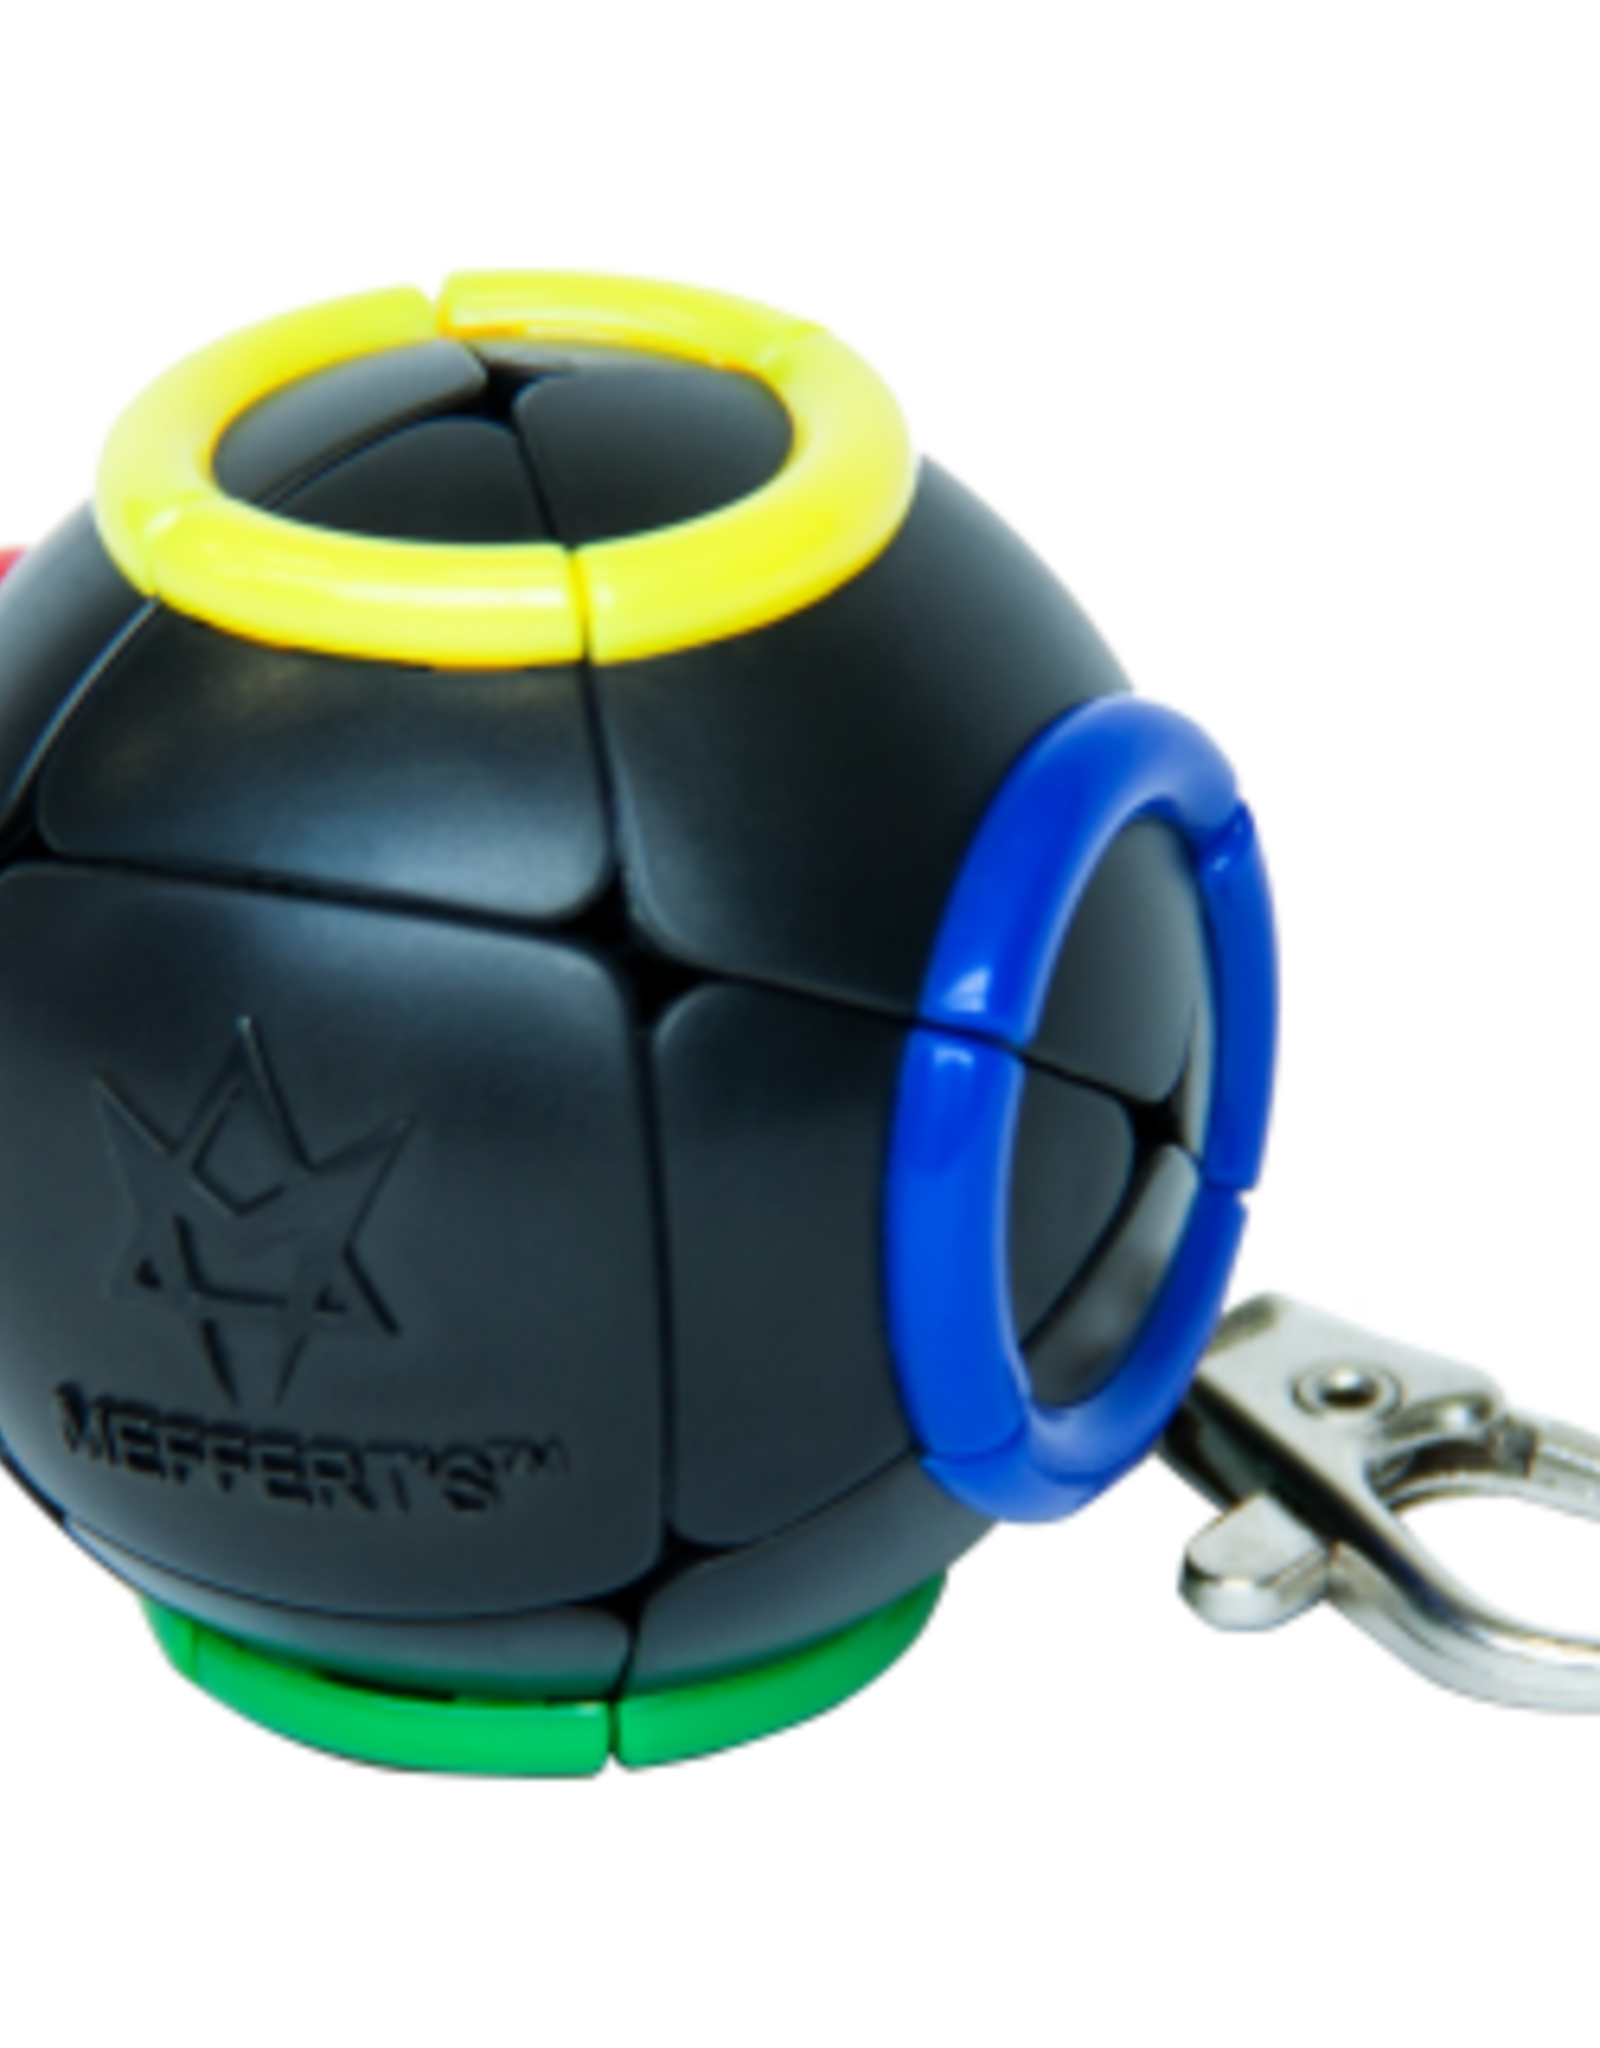 Meffert's Mini Diver's Helmet Keychain Puzzle